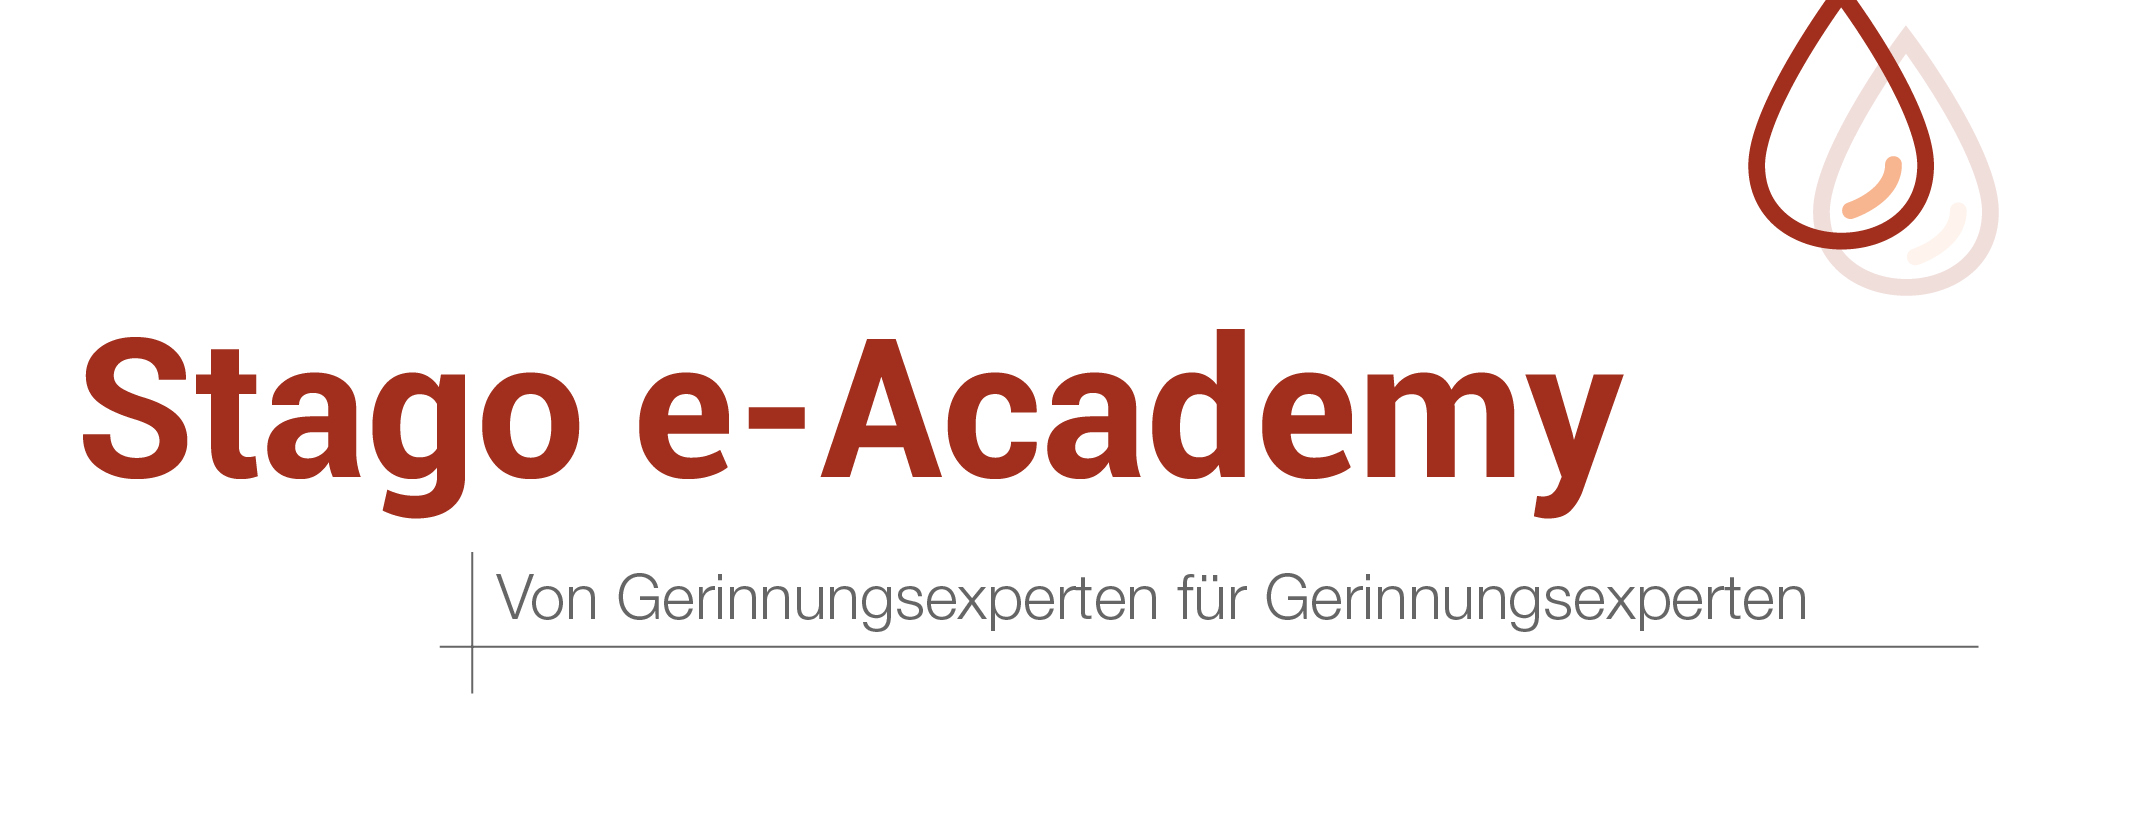 Stago e-Academy Logo